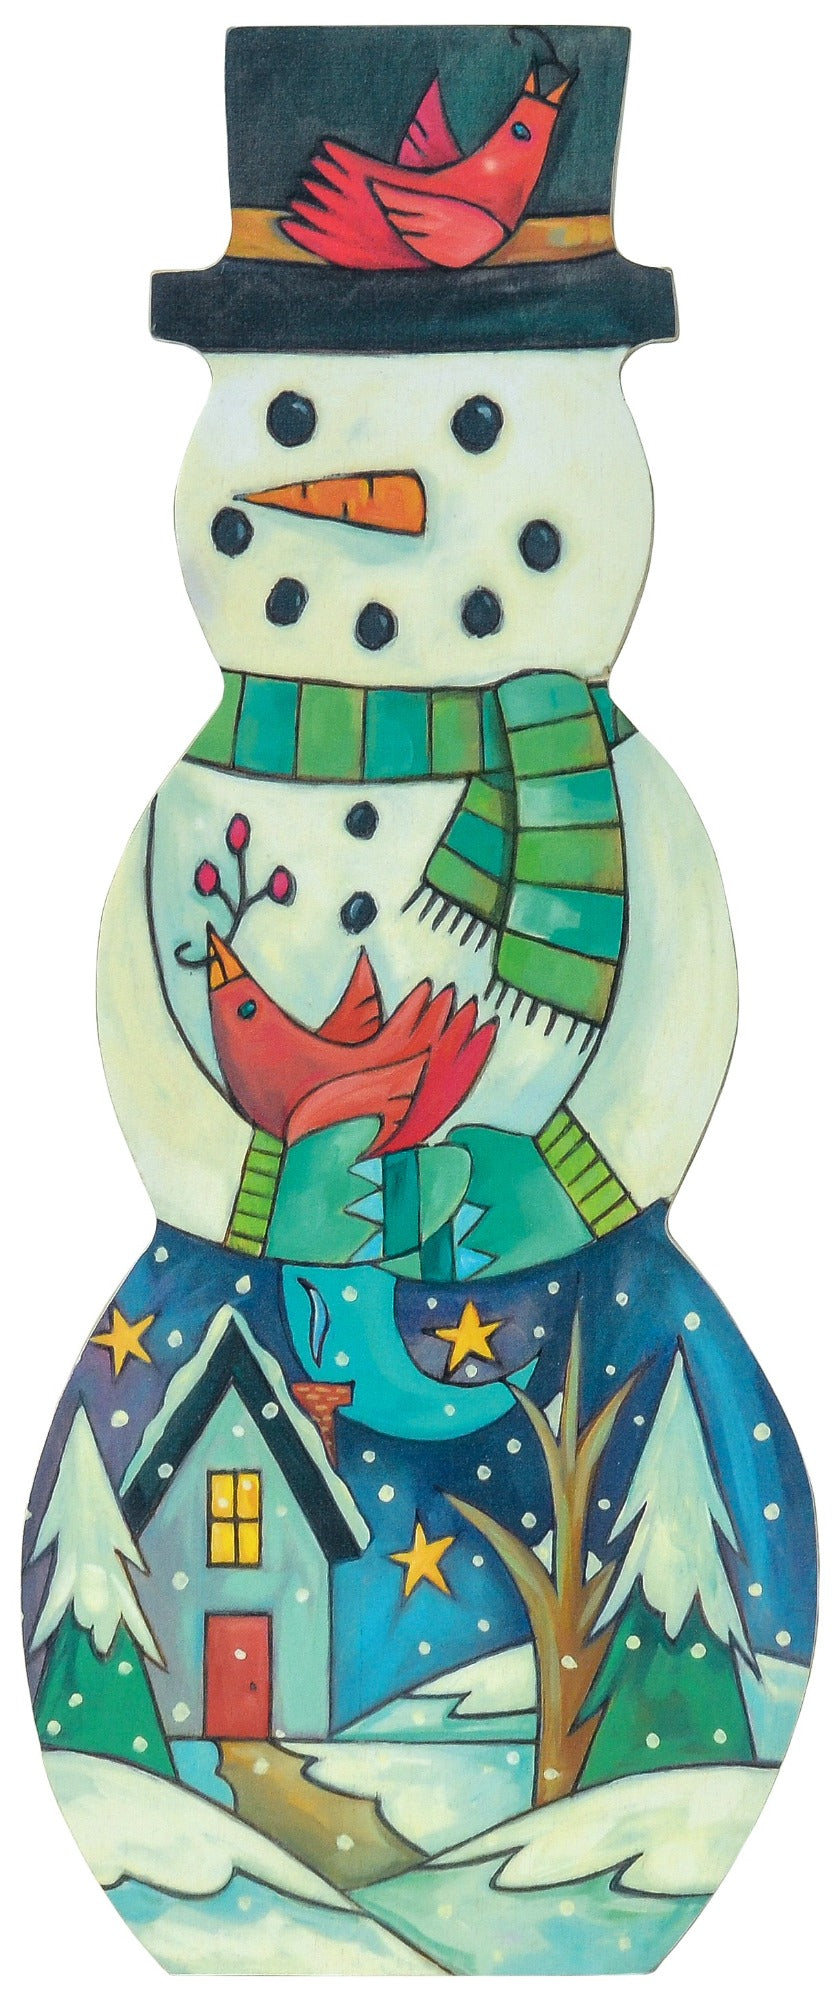 Merry + Bright Snowman Wood Sculpture